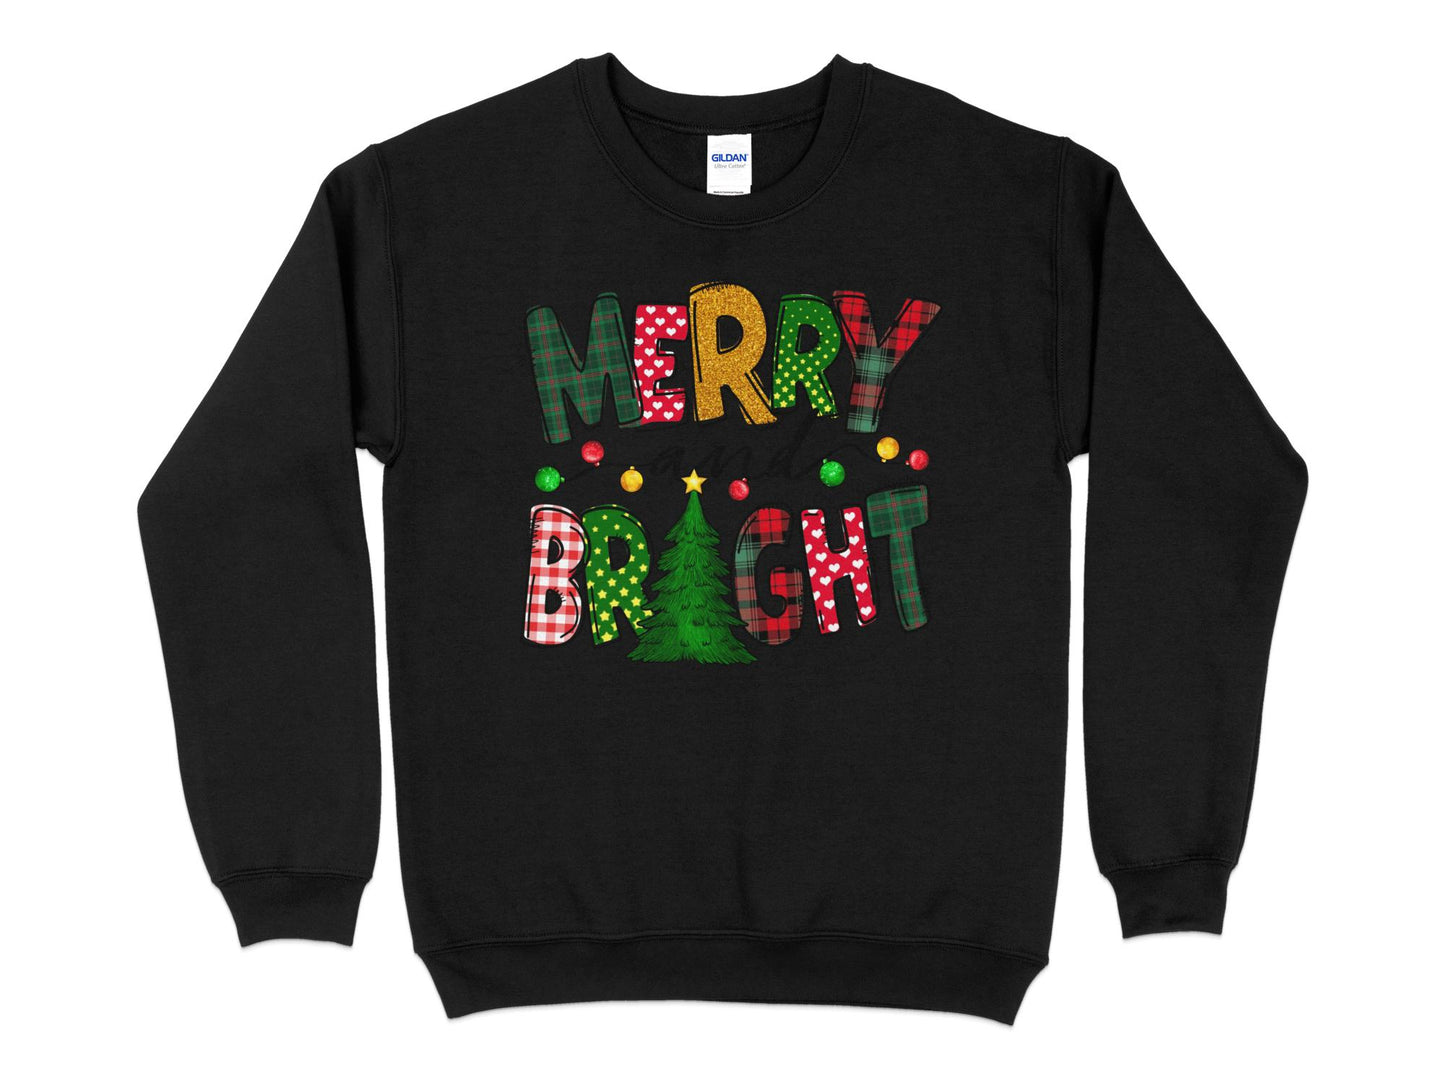 Merry and Bright Sweatshirt, Merry Christmas Shirt for Women, Christmas Crewneck - Mardonyx Sweatshirt Black / S